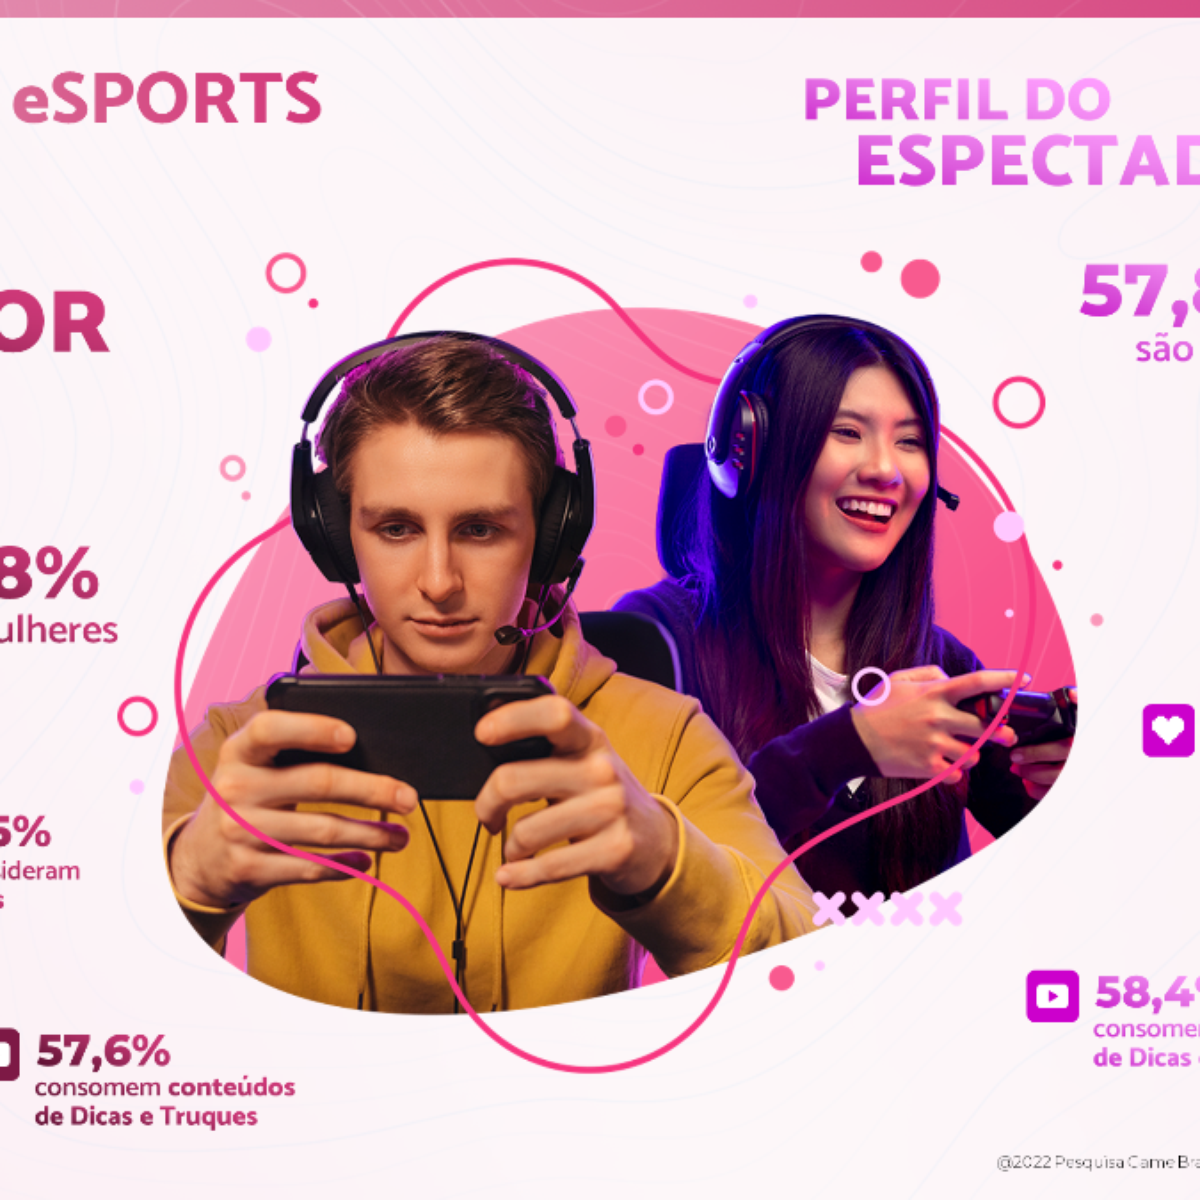 Games e smartphones: a dupla preferida dos brasileiros - Infobase